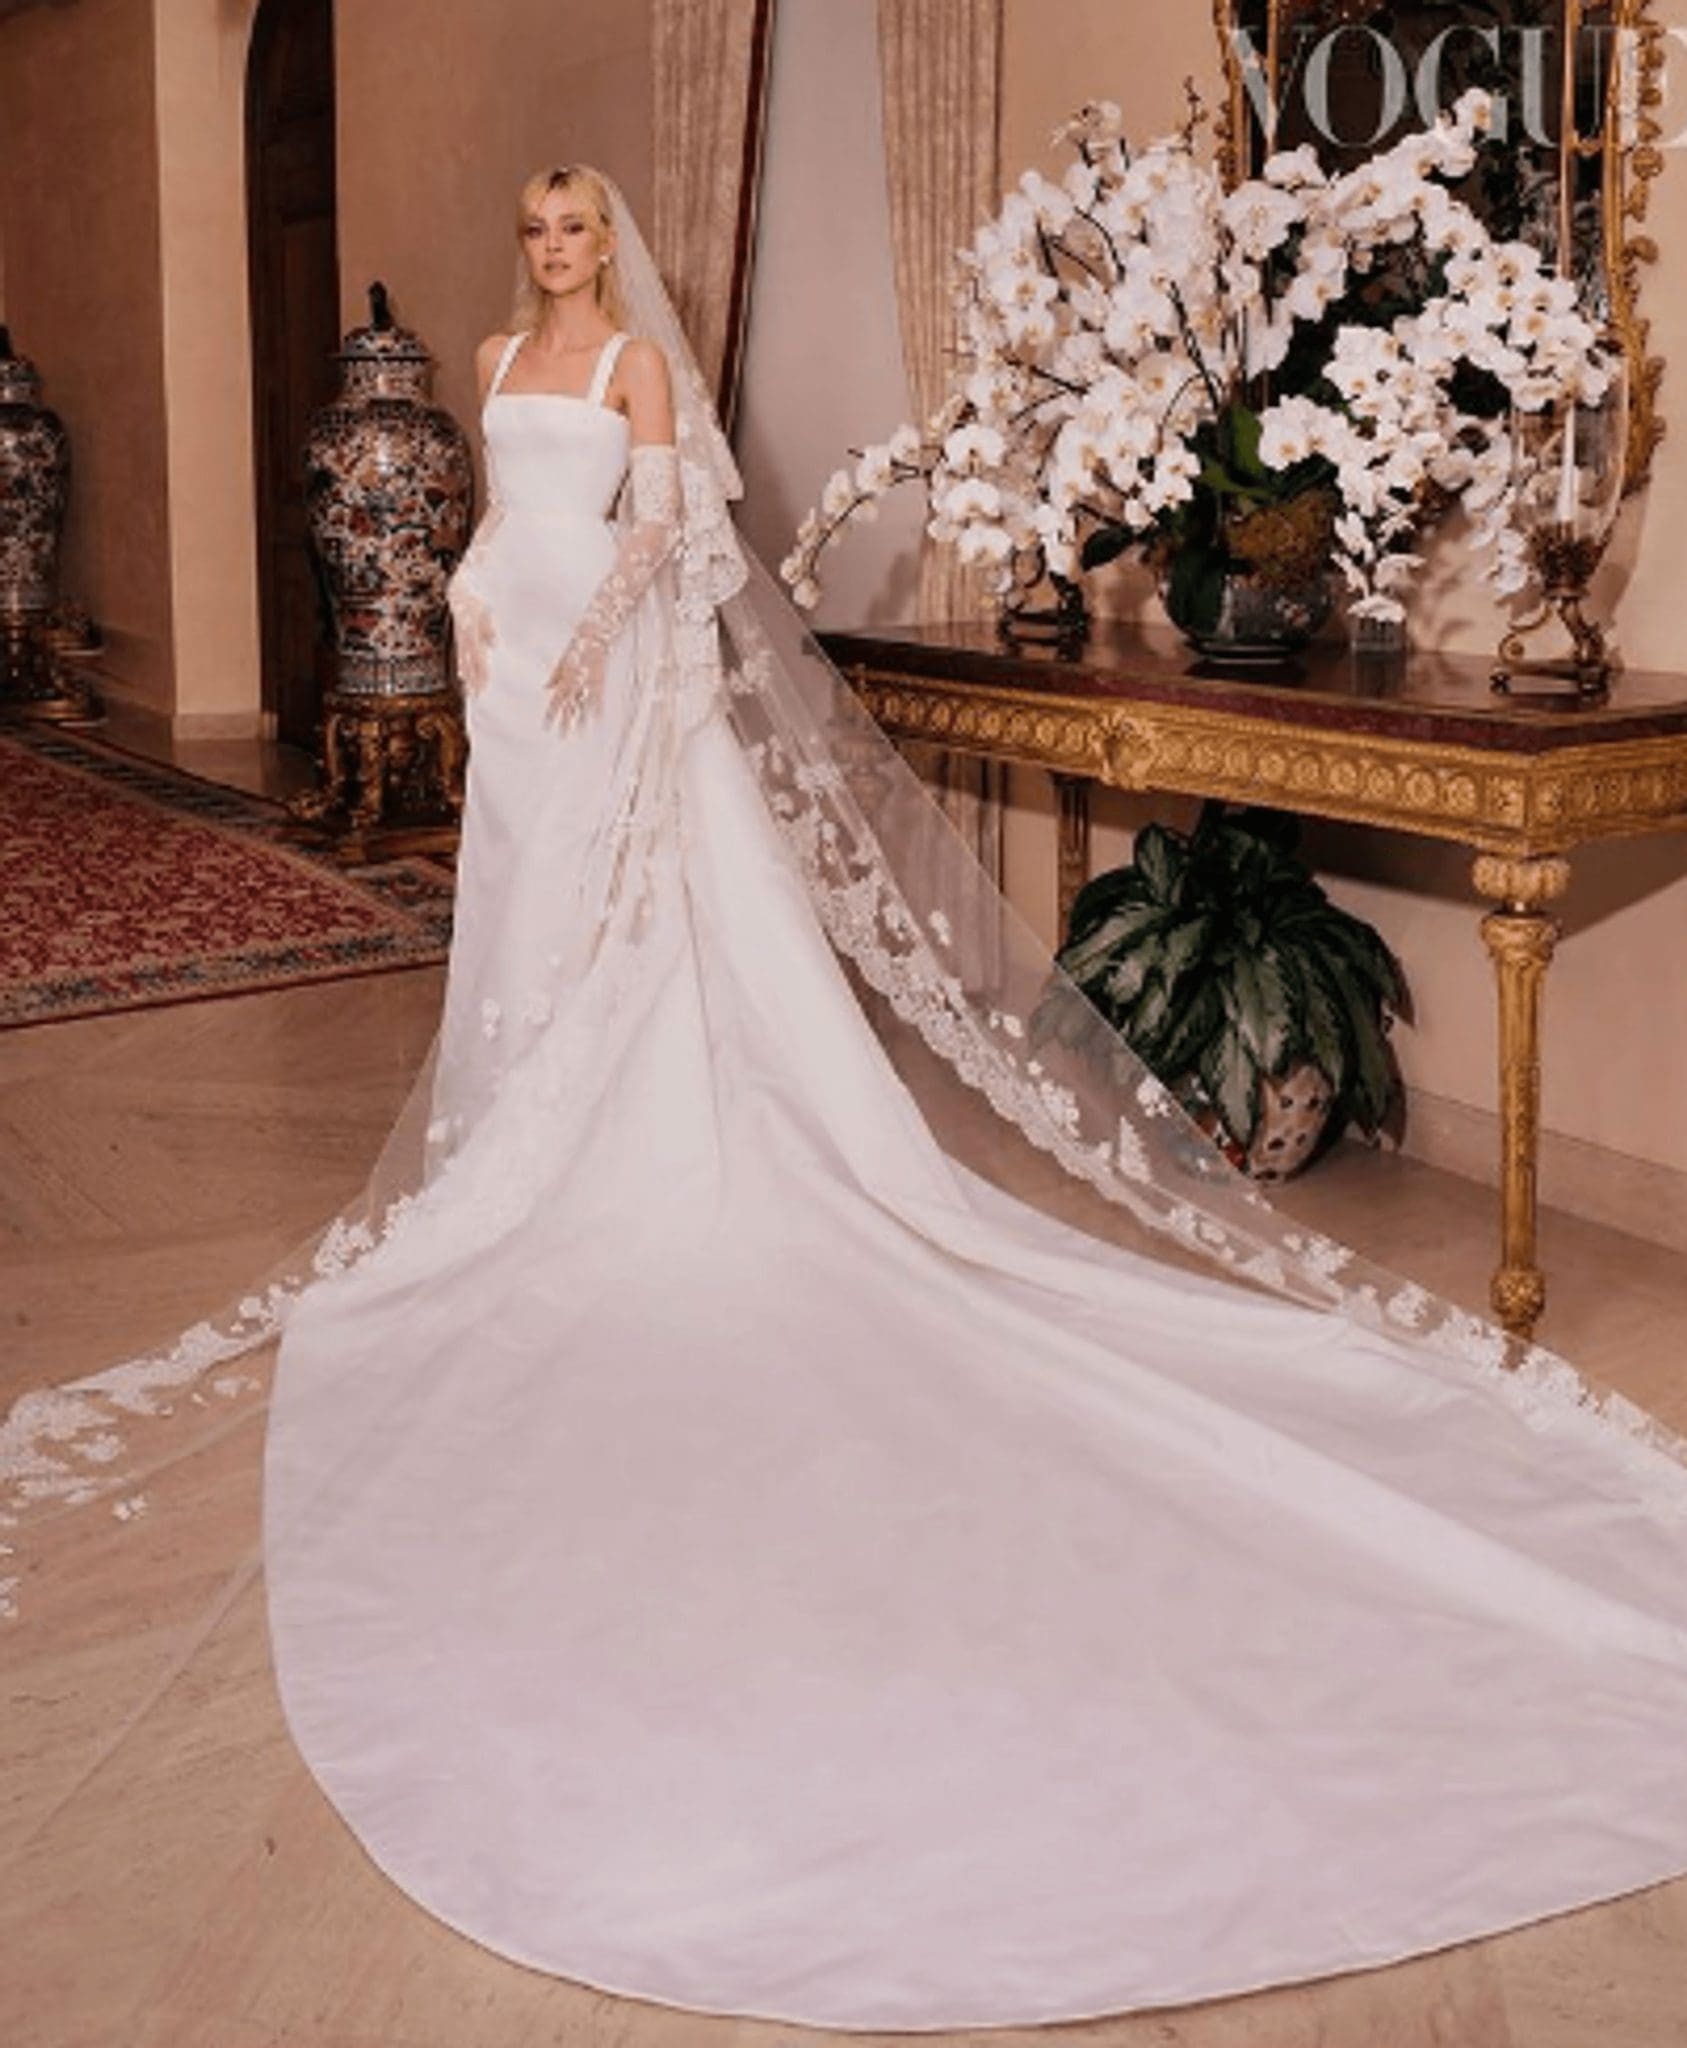 Nicola Peltz Why I choose not to wear a Victoria Beckham bridal gown